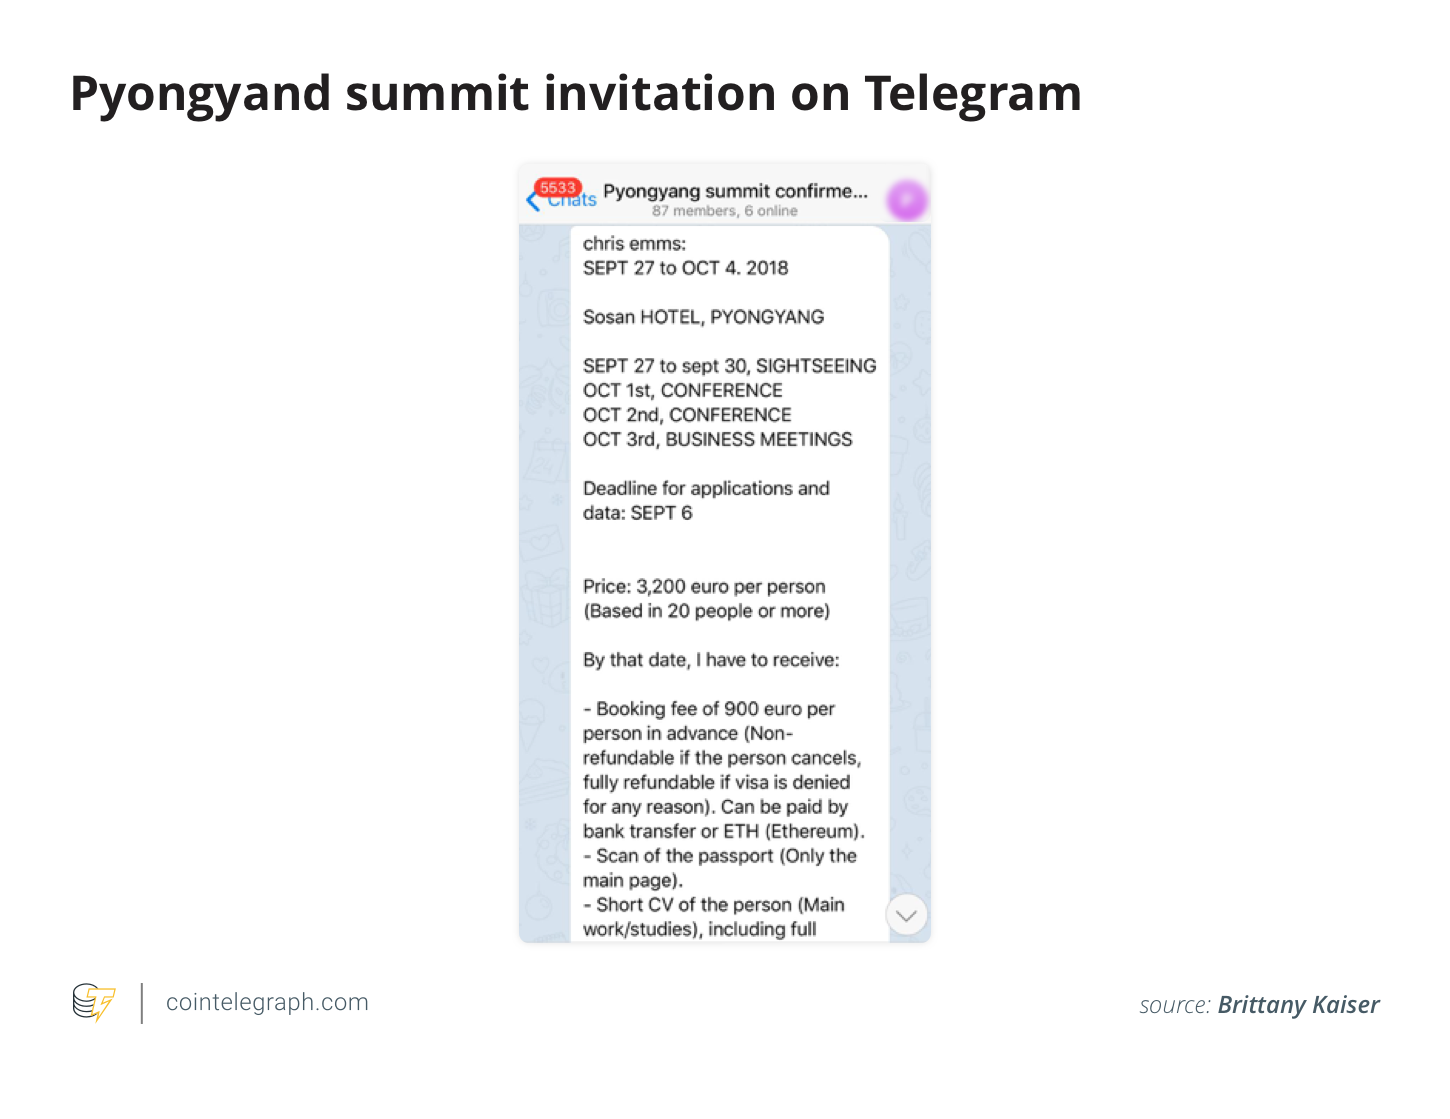 Pyongyand summit invitation on Telegram